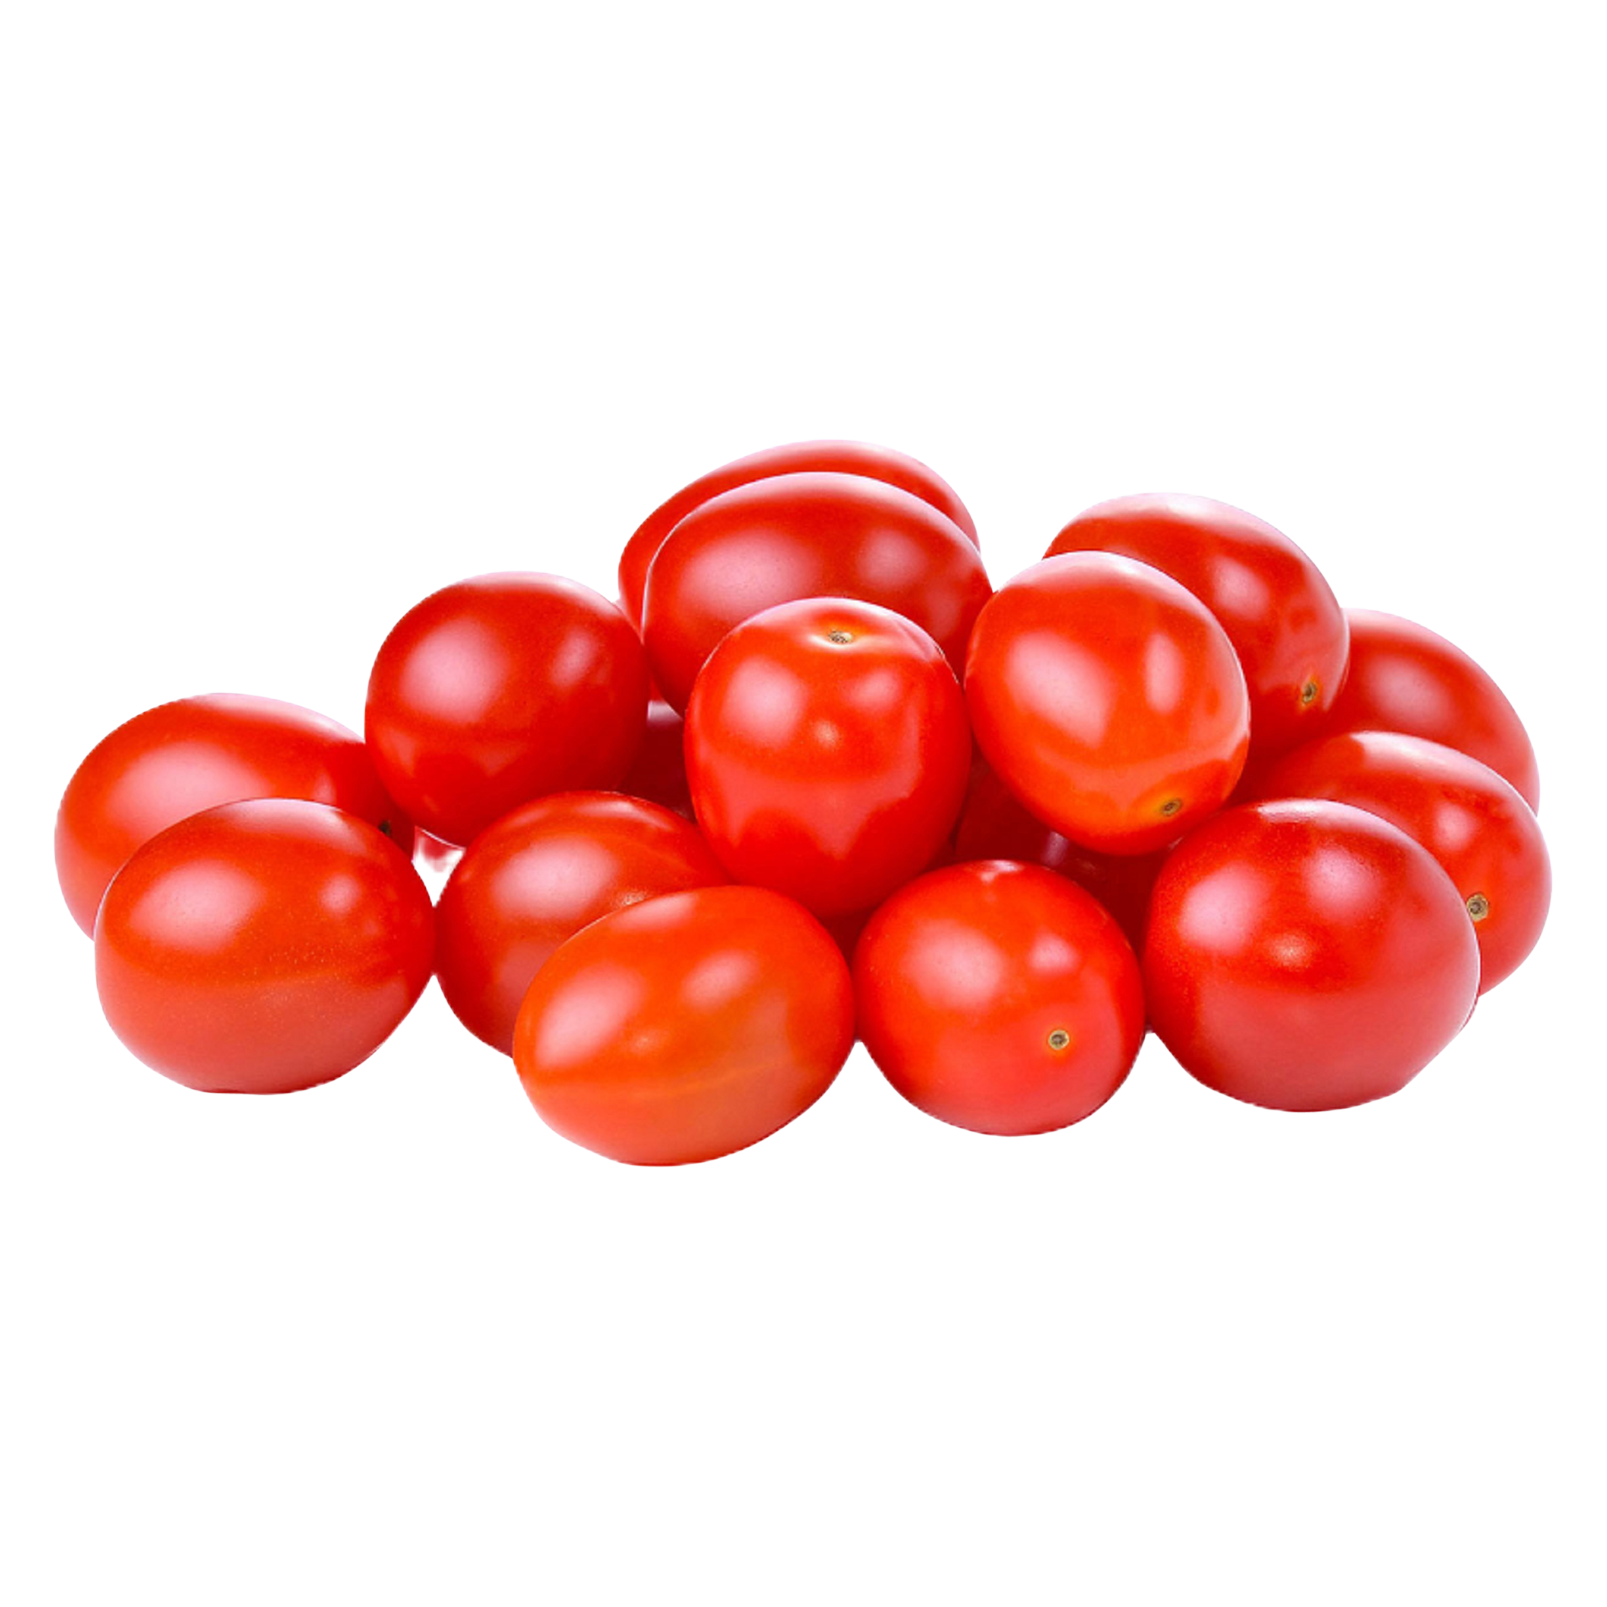 Organic Grape Tomatoes  - 10oz/1pt